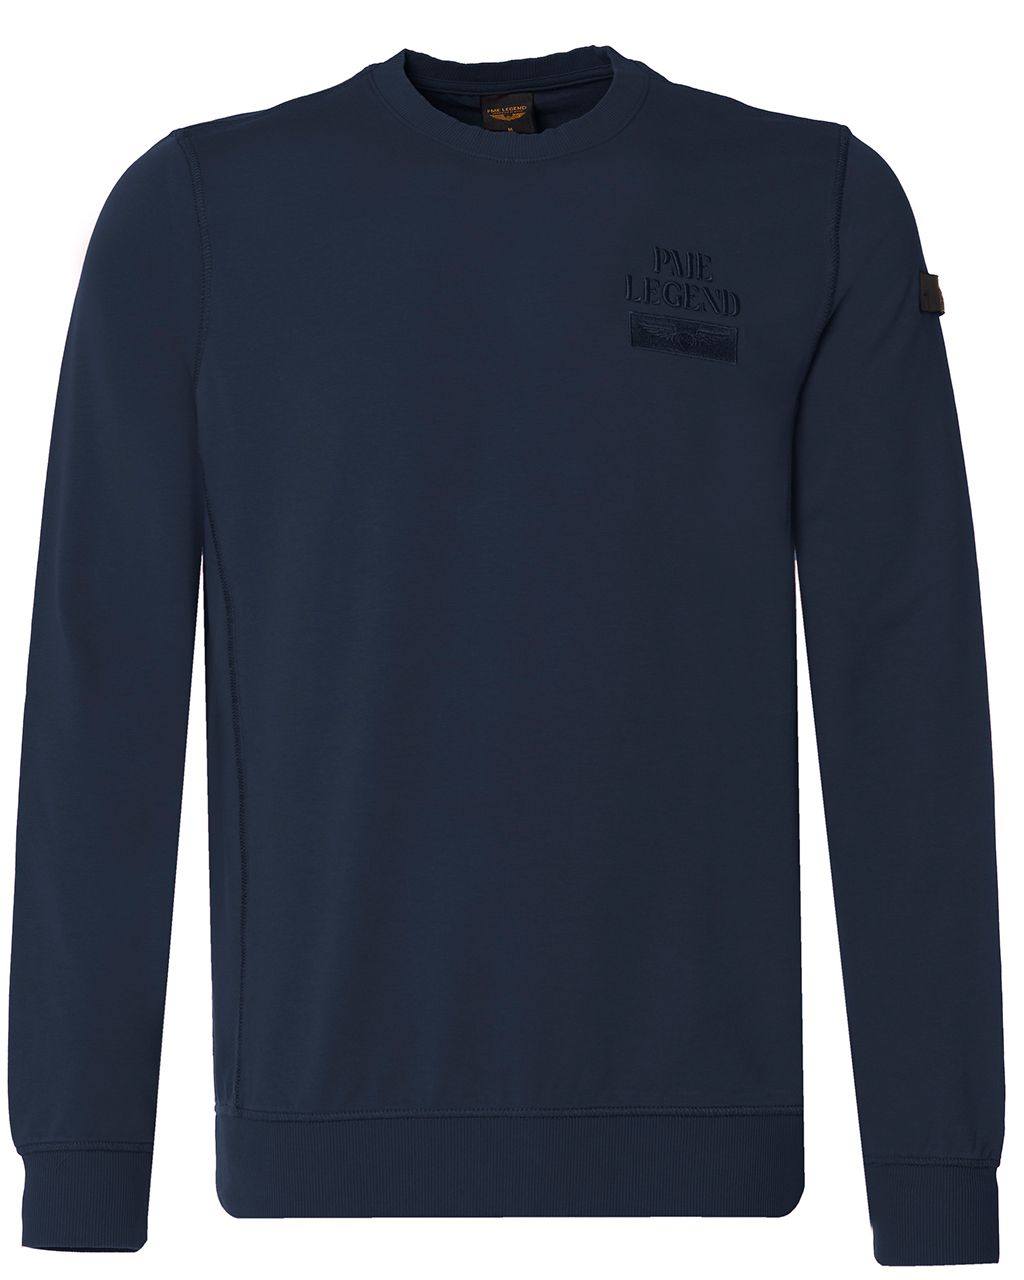 PME Legend Sweater Blauw 076103-001-L